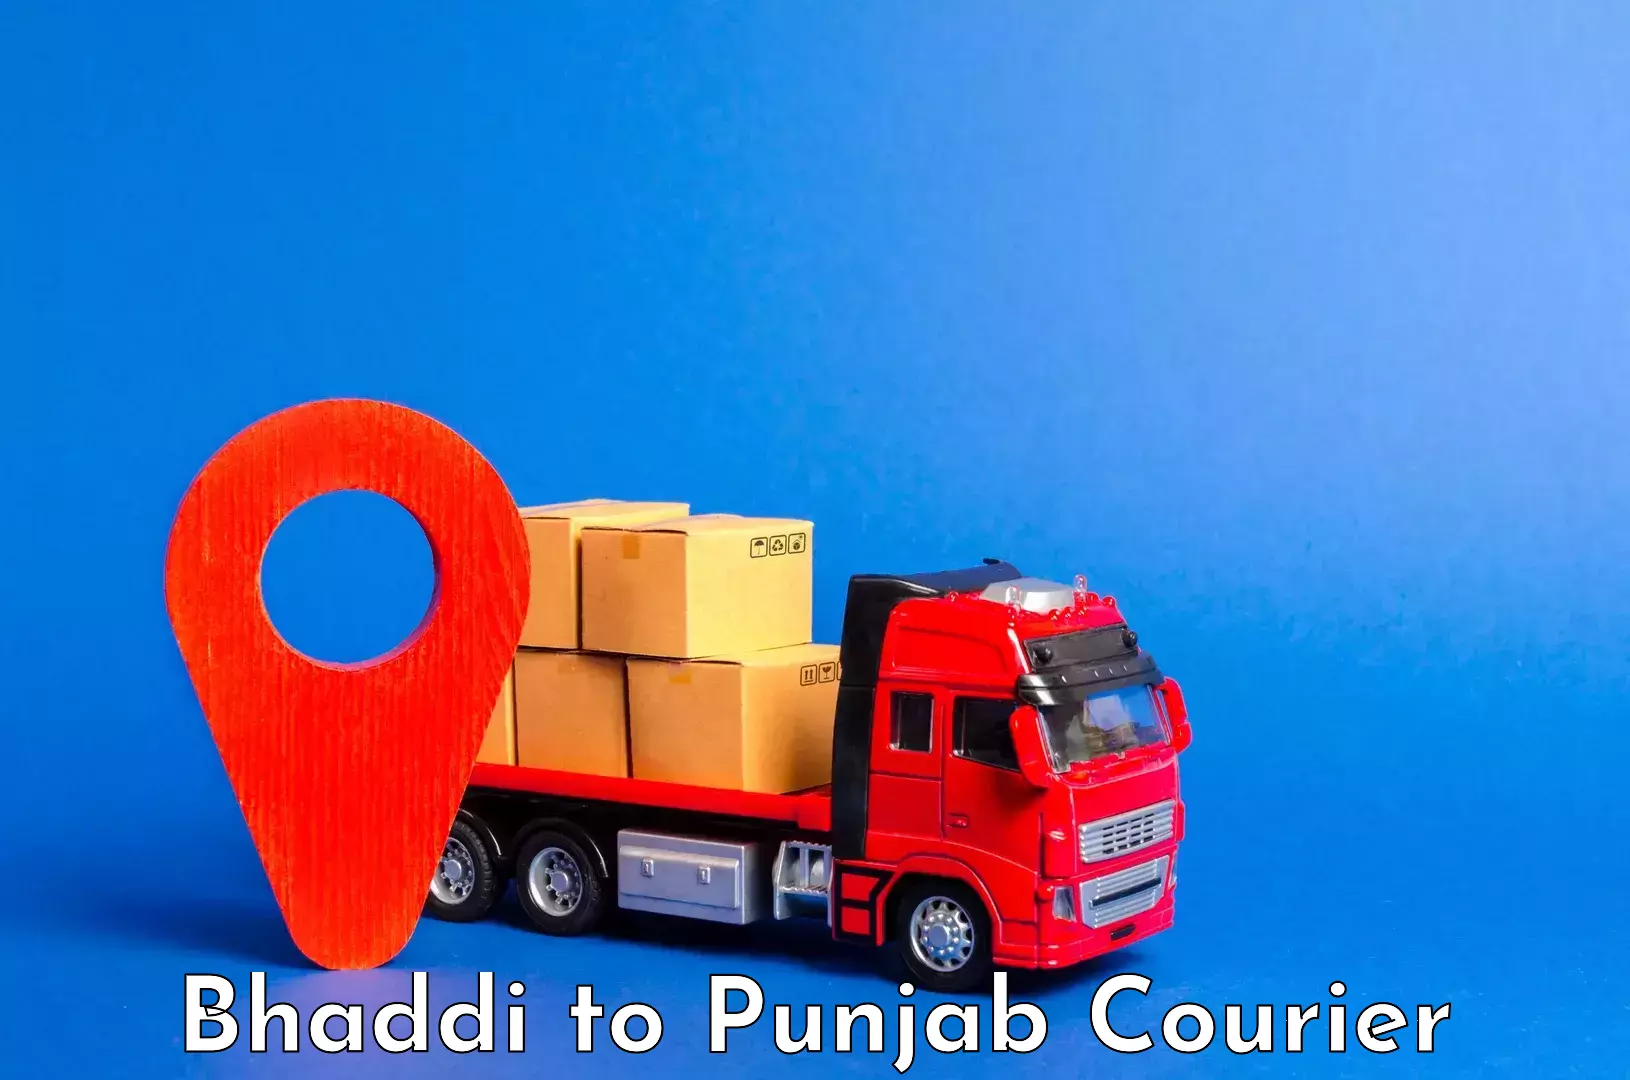 Luggage shipment specialists Bhaddi to Amritsar